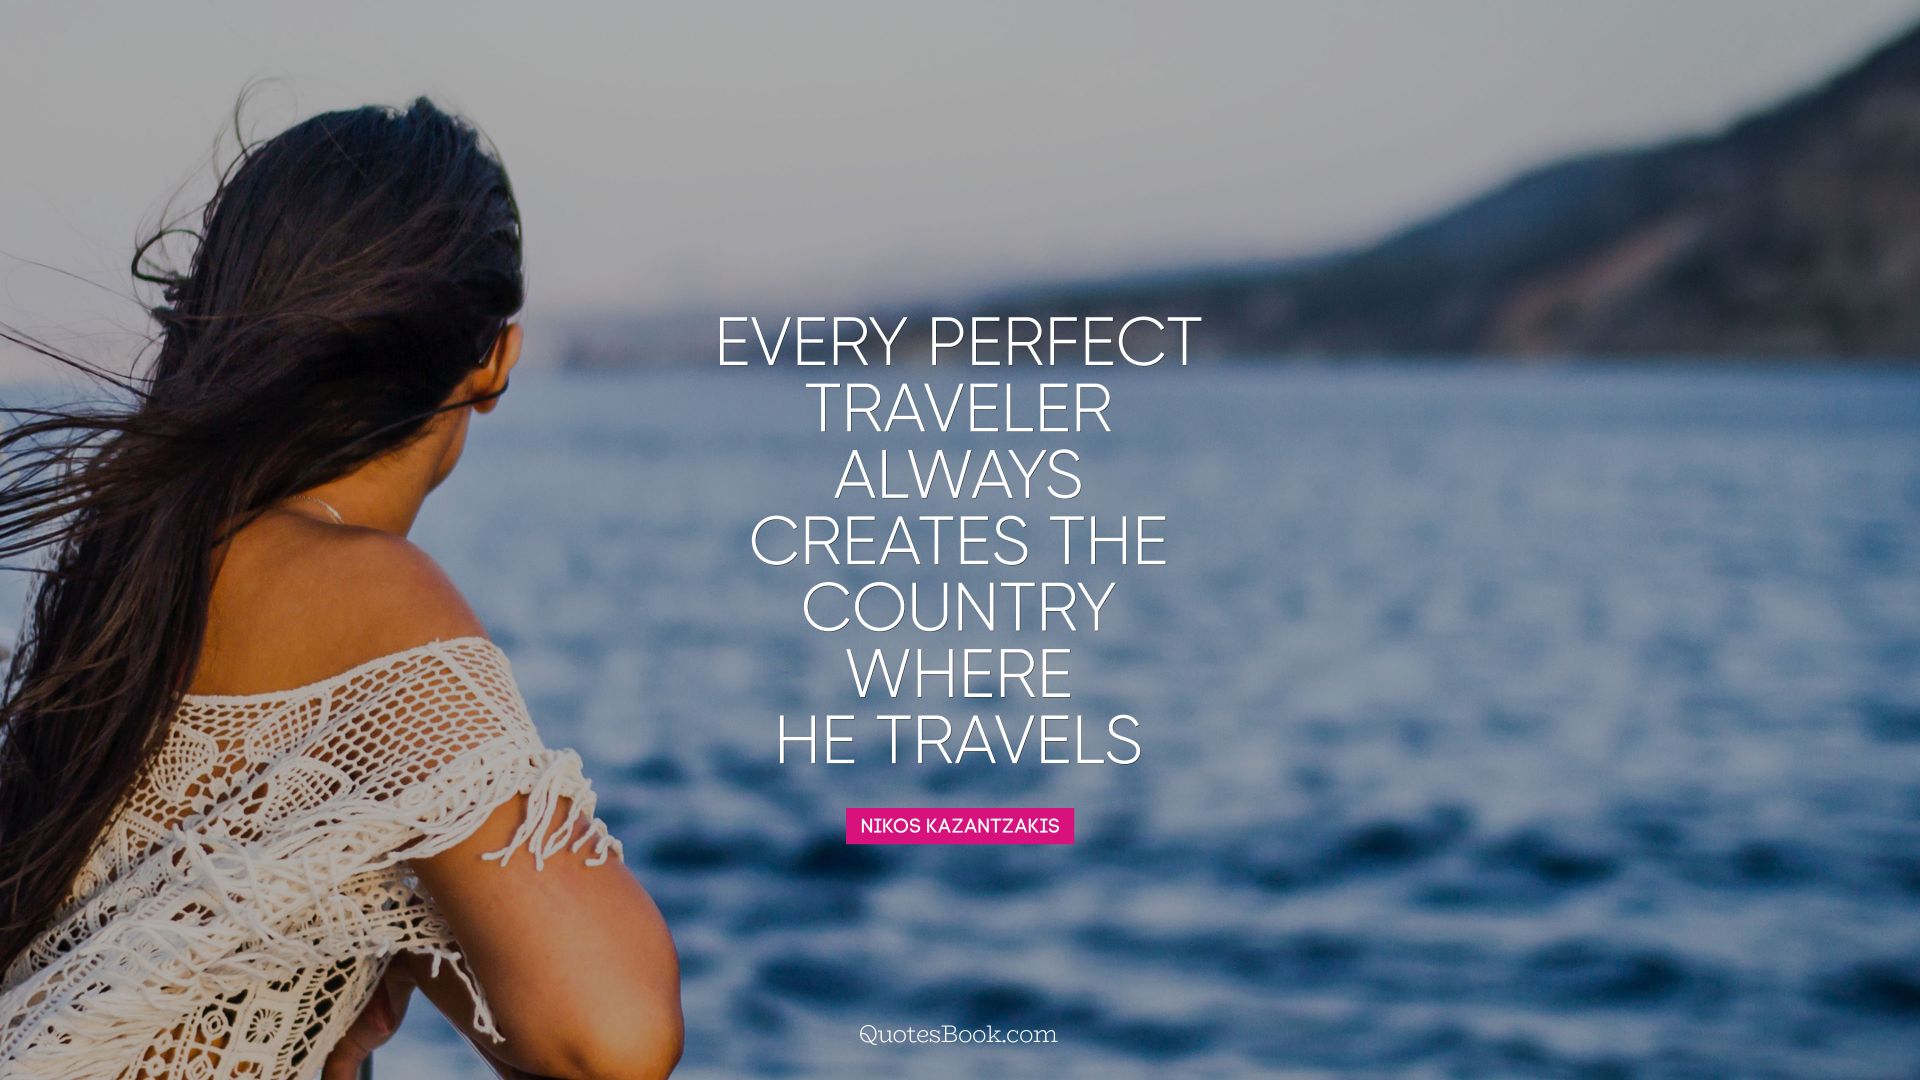 Every perfect traveler always creates the country where he travels. - Quote by Nikos Kazantzakis